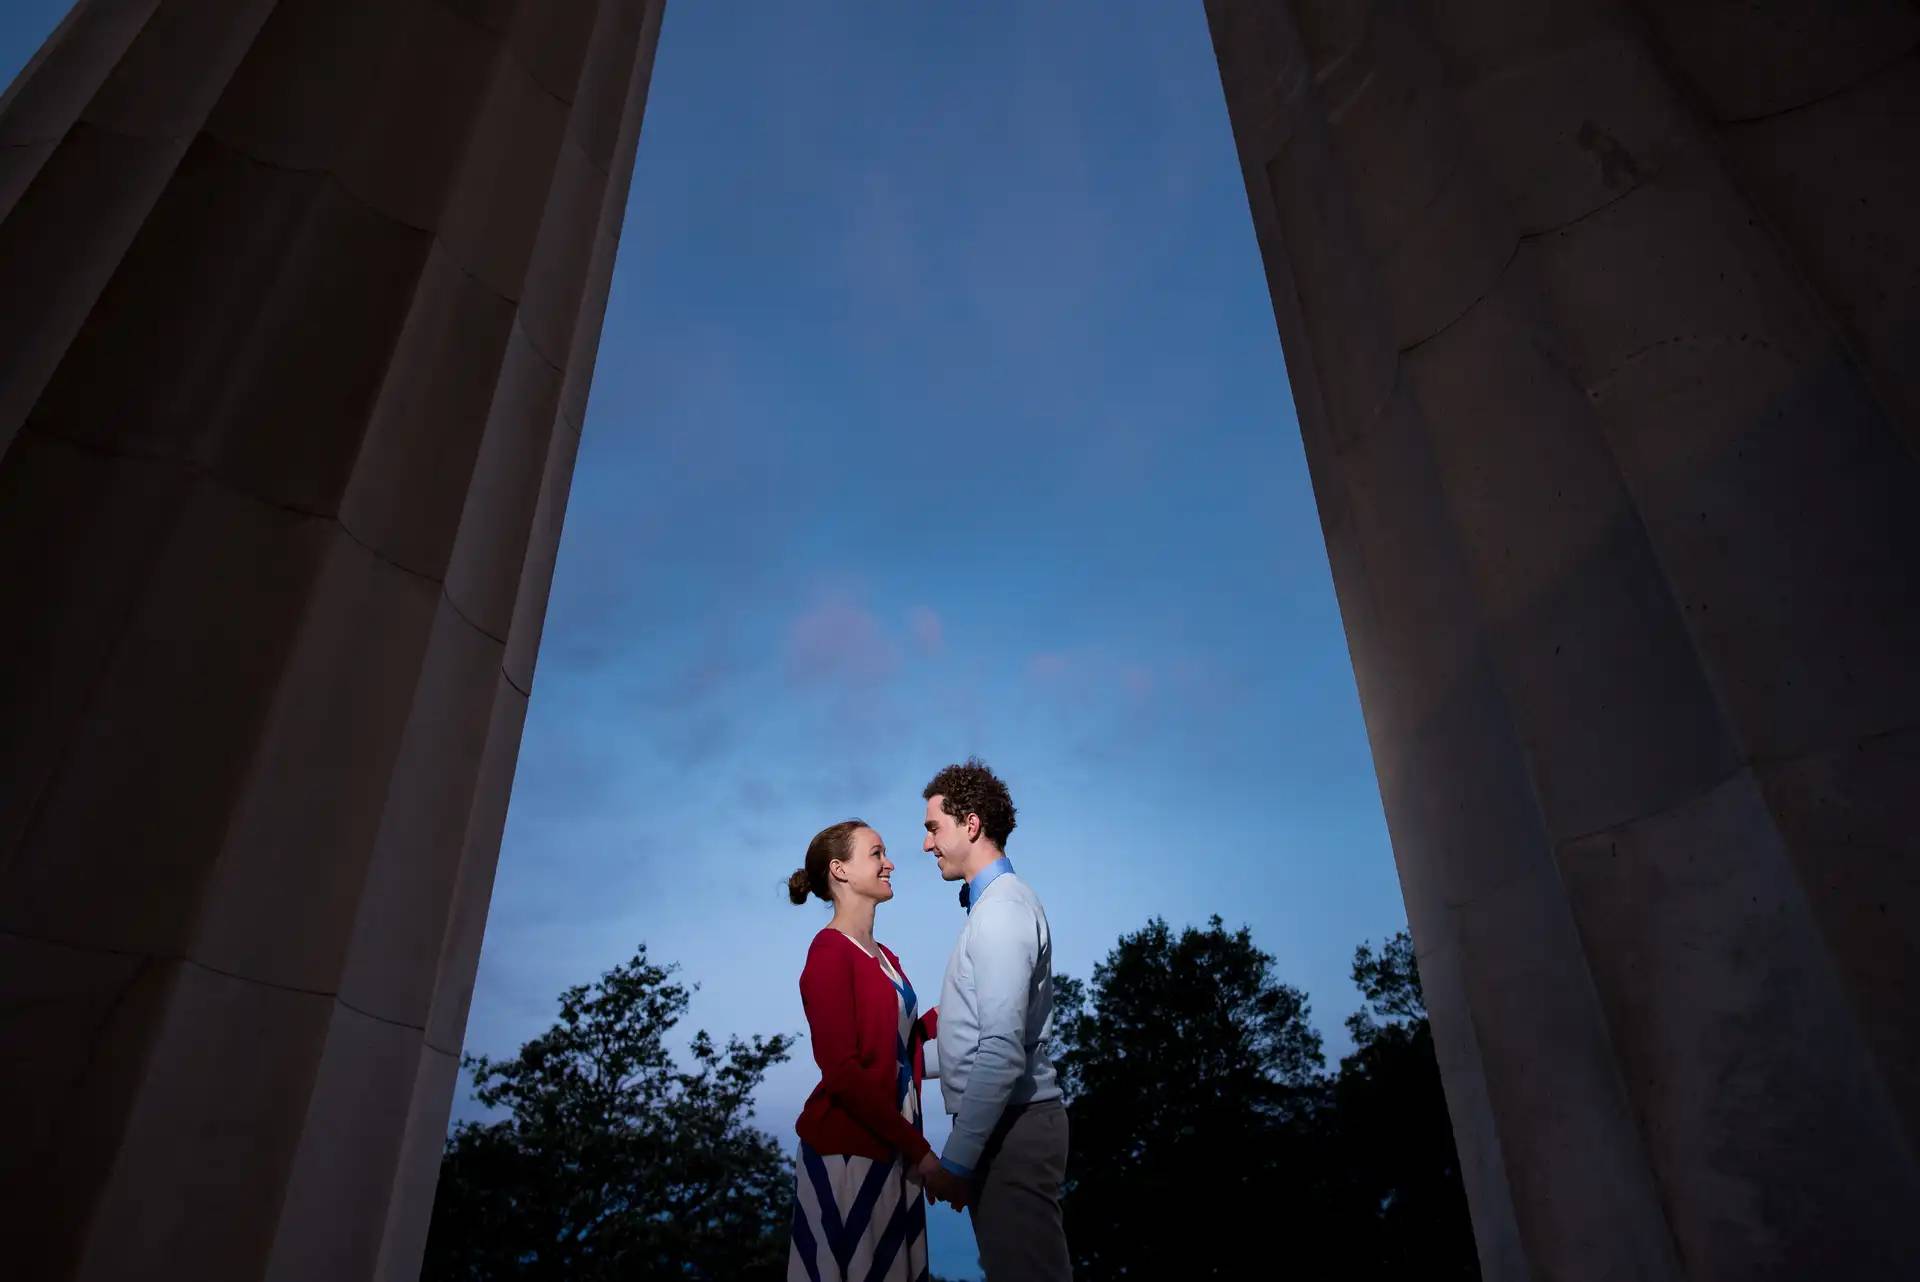 séance photo couple au lincoln memorial washington